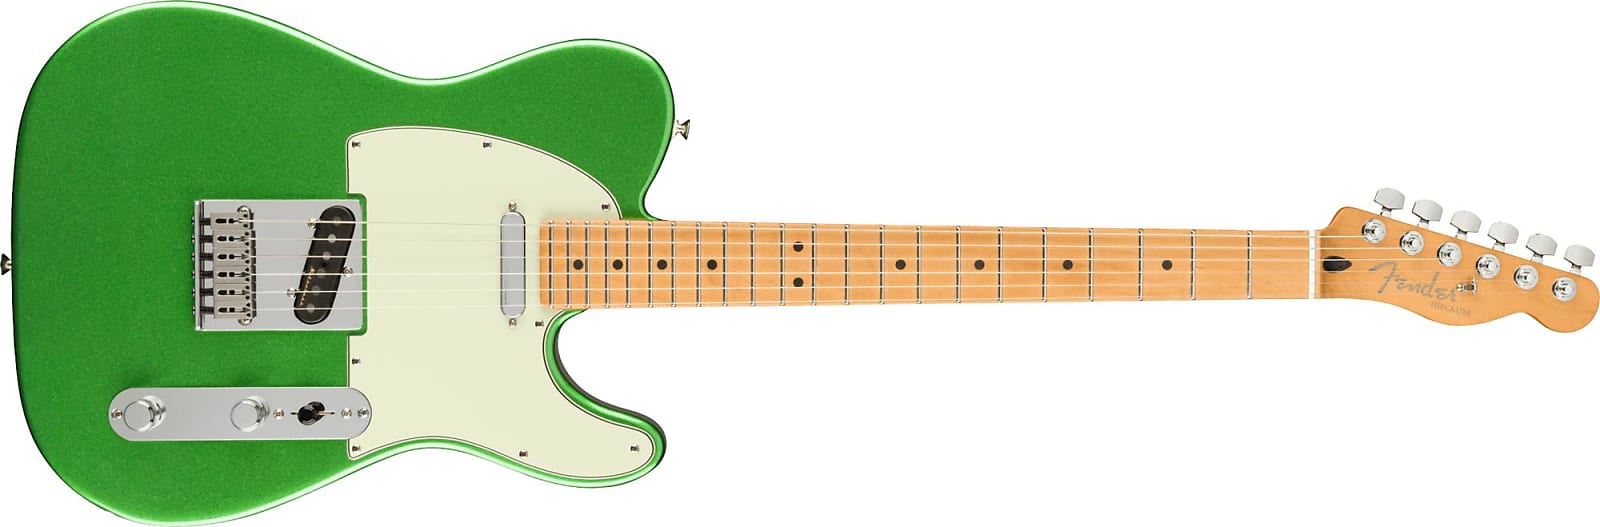 Fender Telecaster Play Plus